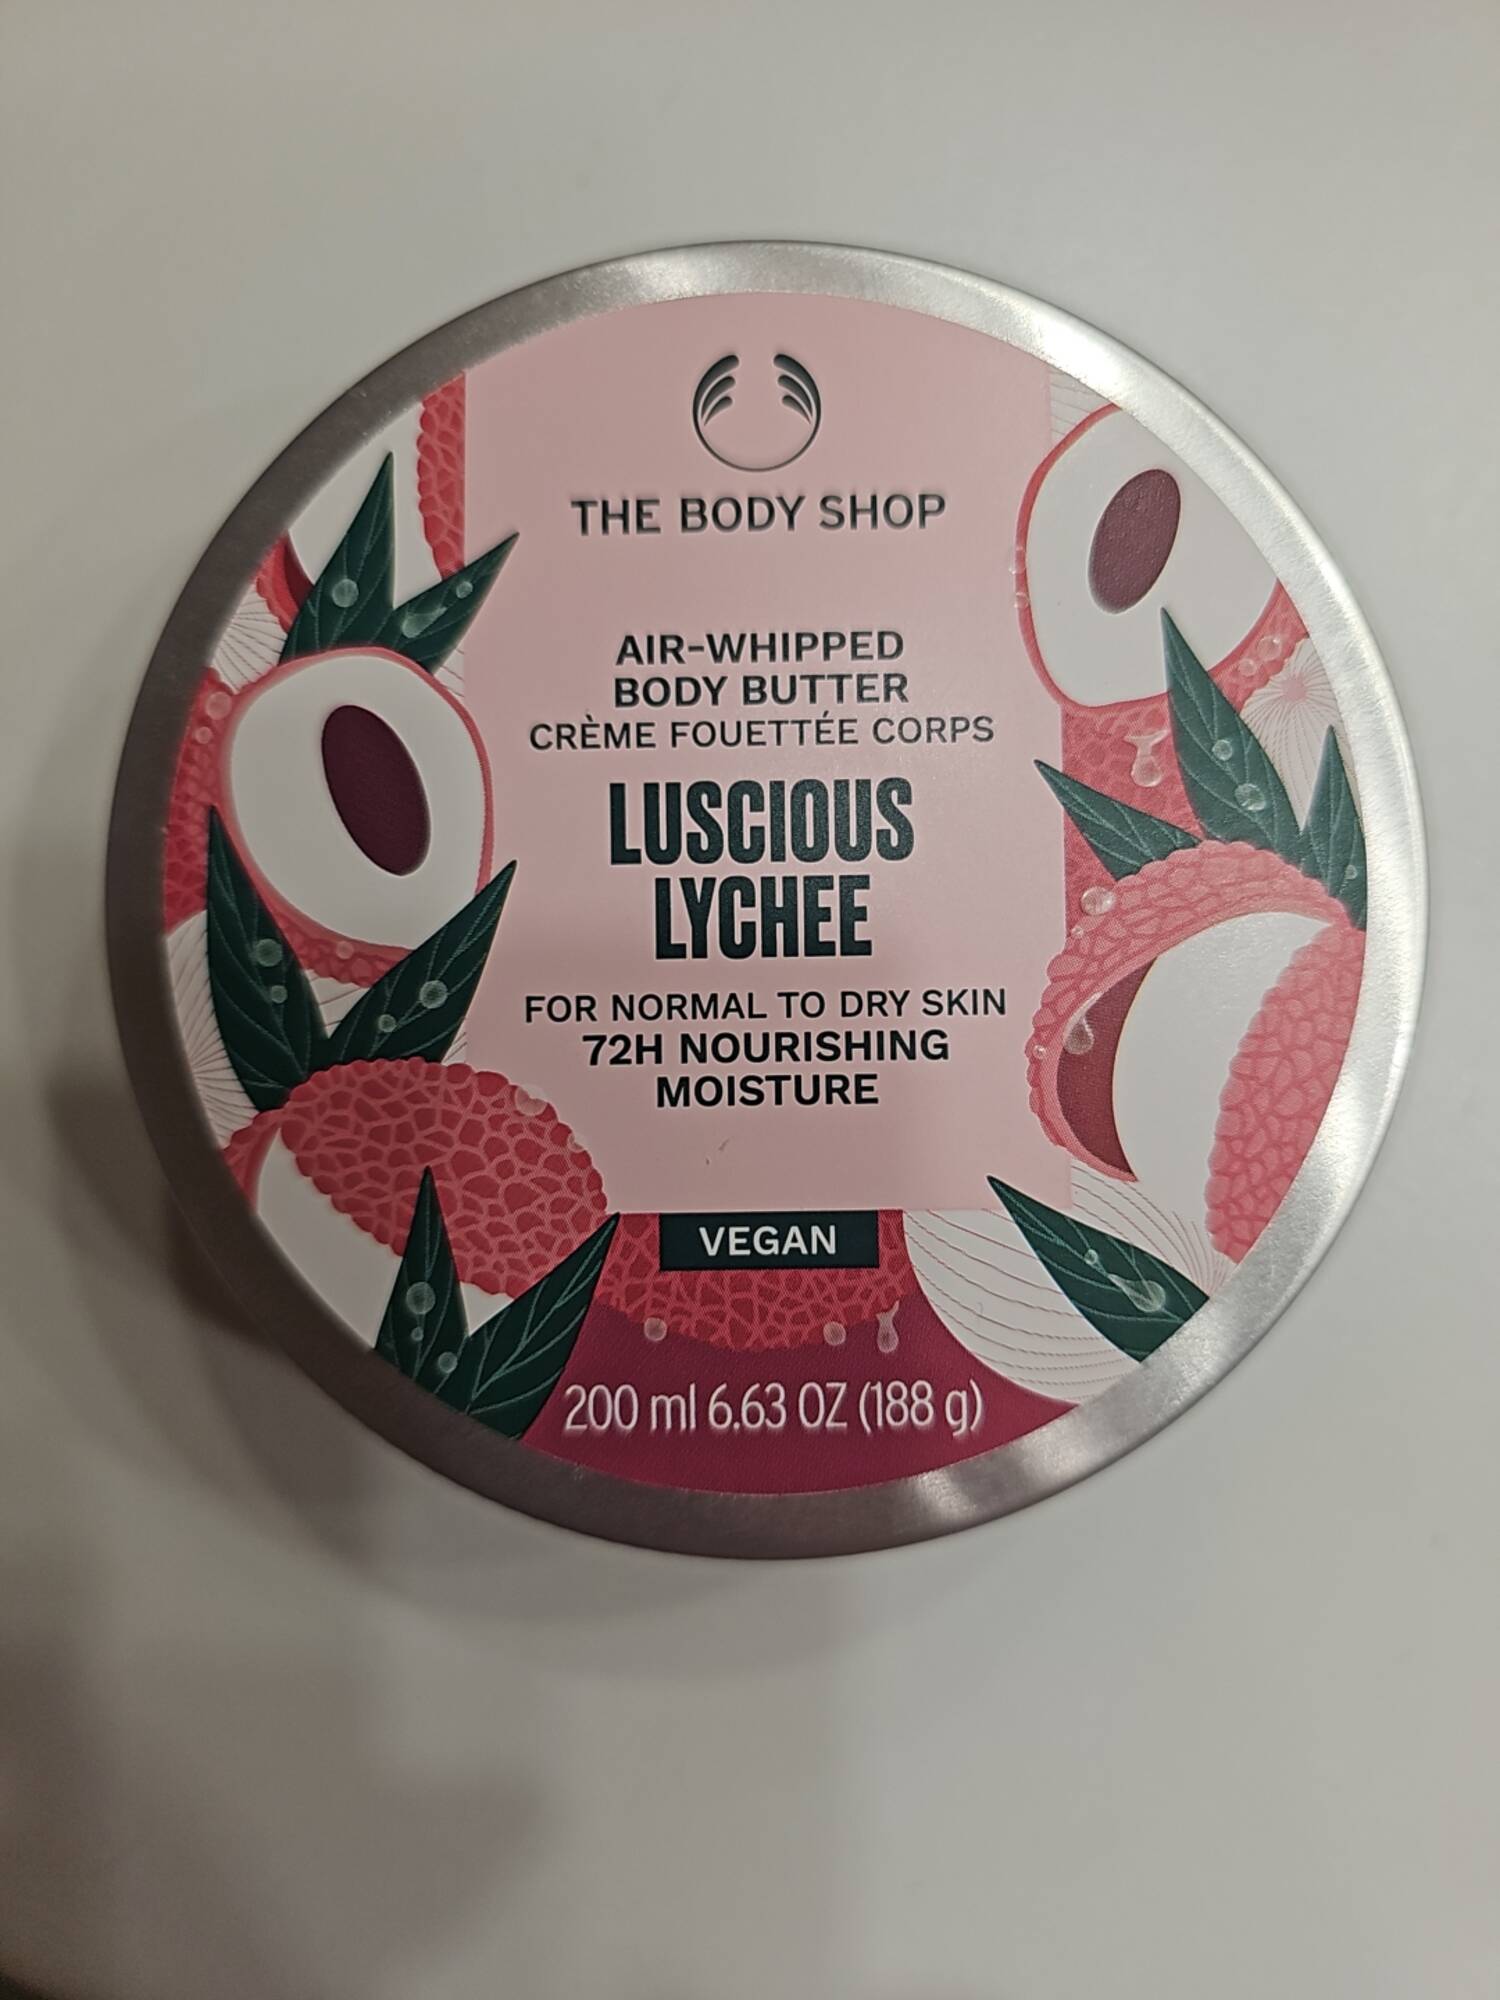 THE BODY SHOP - Luscious lychee - Crème fouettée corps